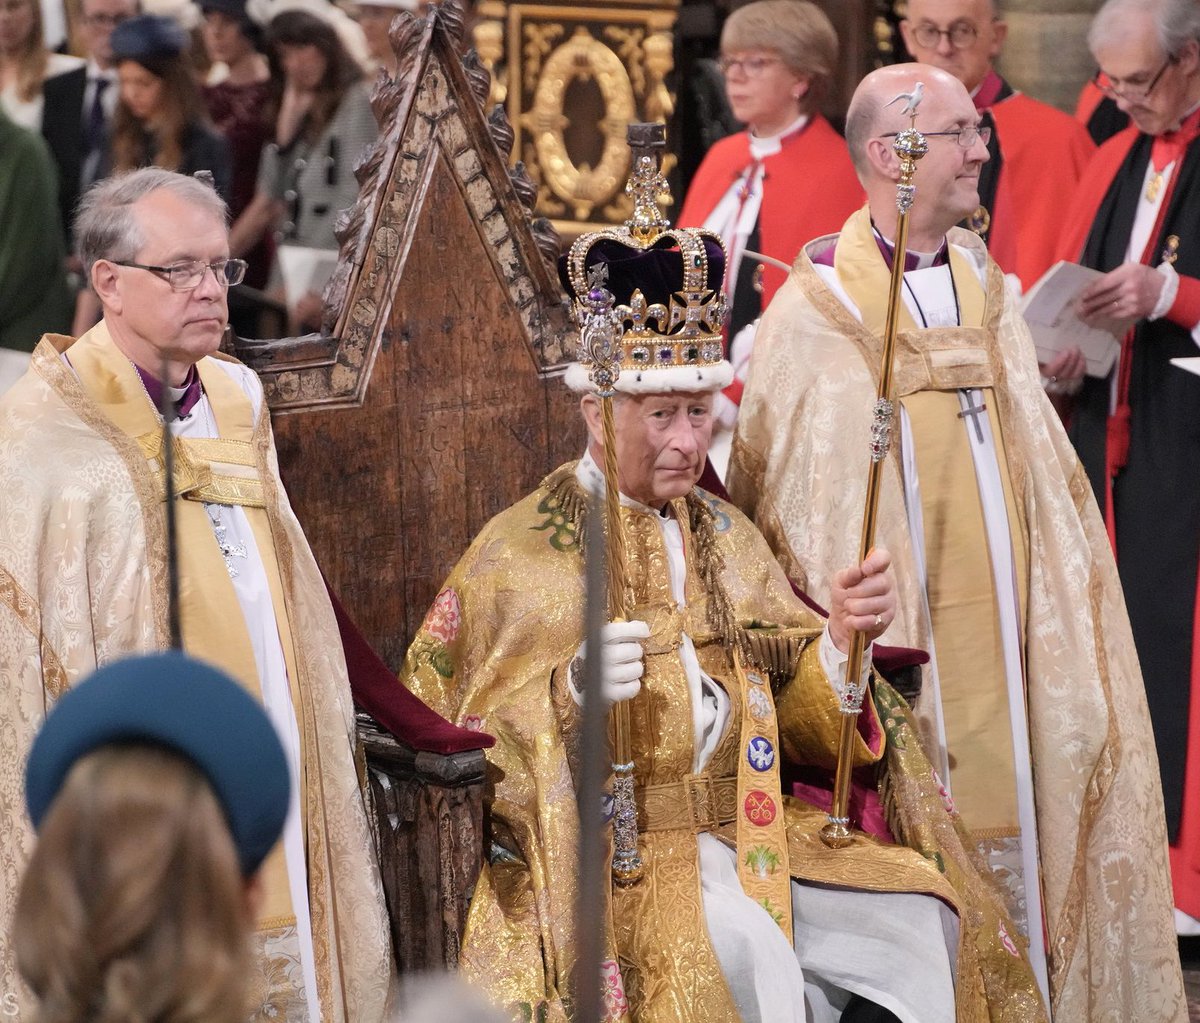 King Charles III has been crowned King #Coronation #KingCharles